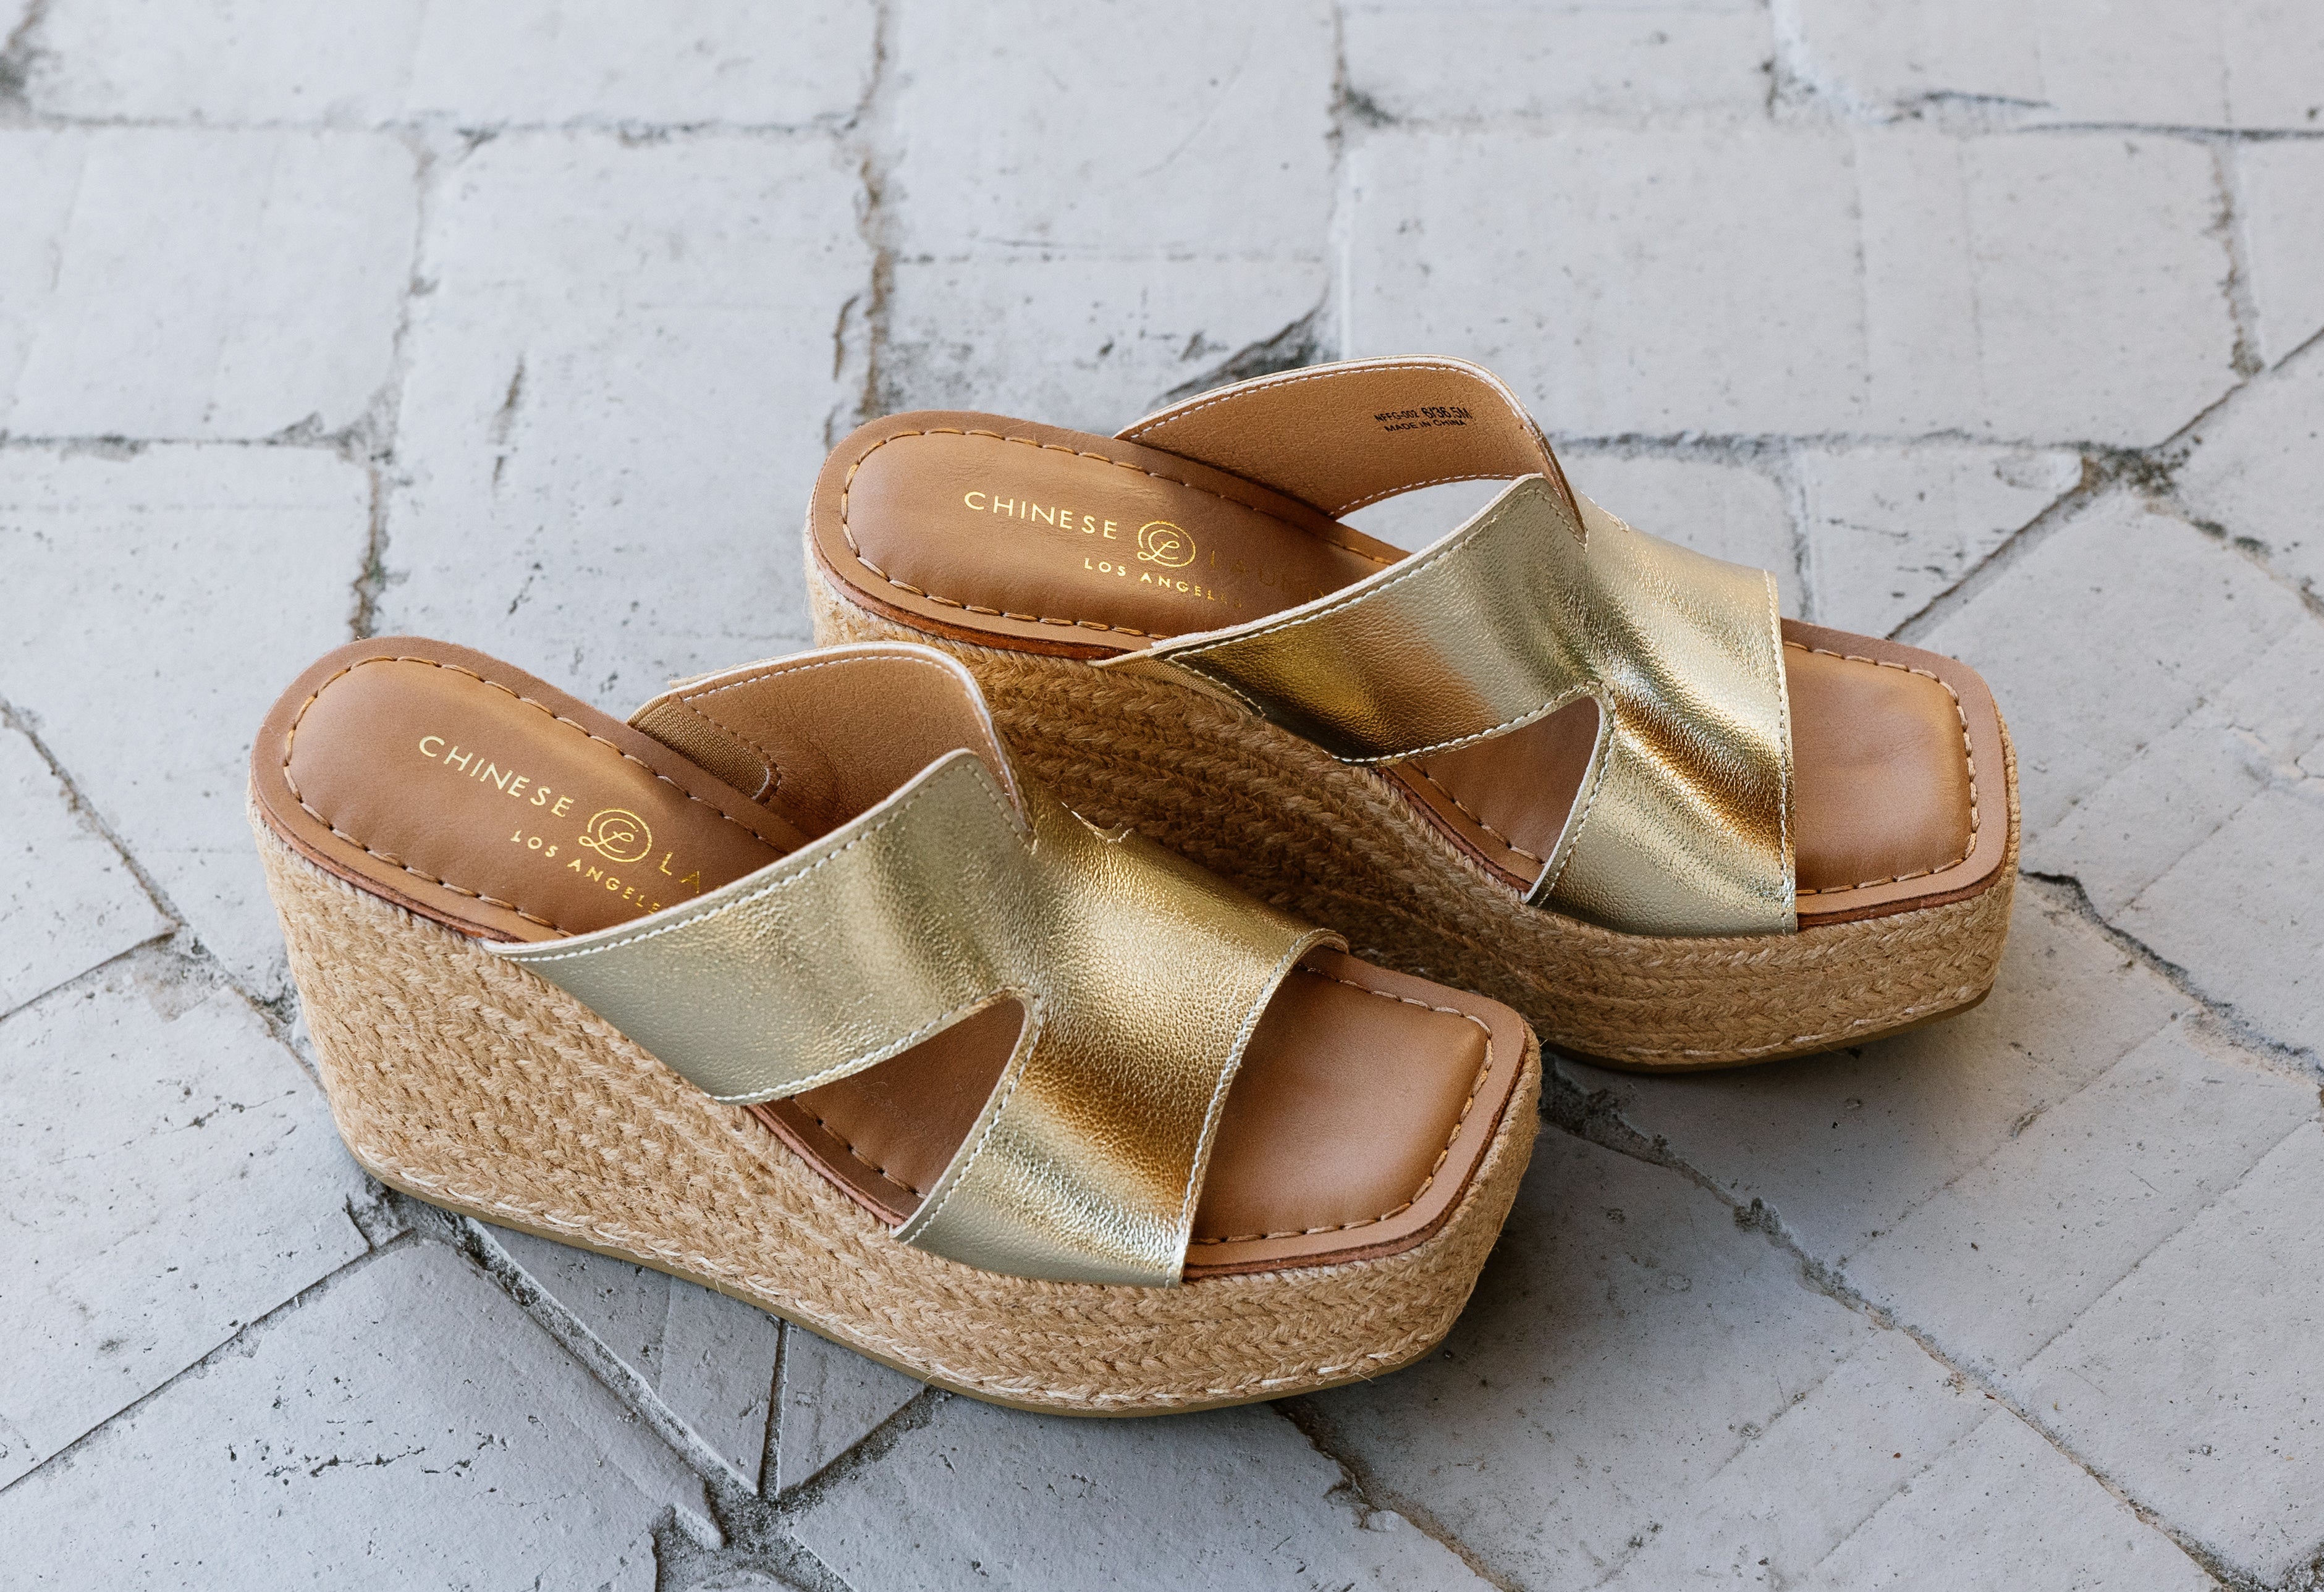 Next Door Wedge Sandals - GOLD - willows clothing Sandals